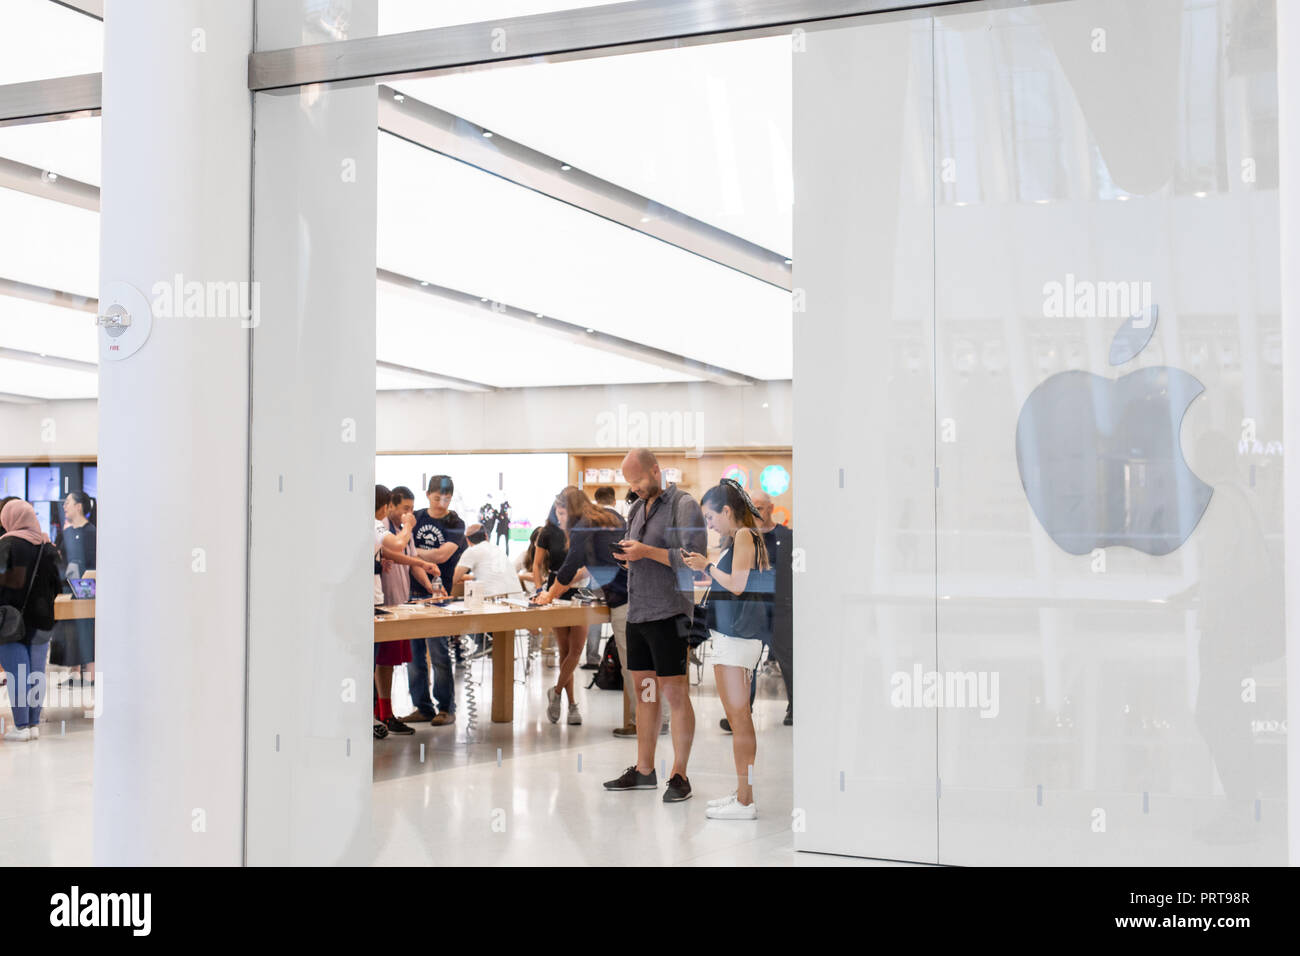 NEW YORK - August 2018: Apple store in Oculus, World Trade Center Transportation Hub in New York, USA Stock Photo